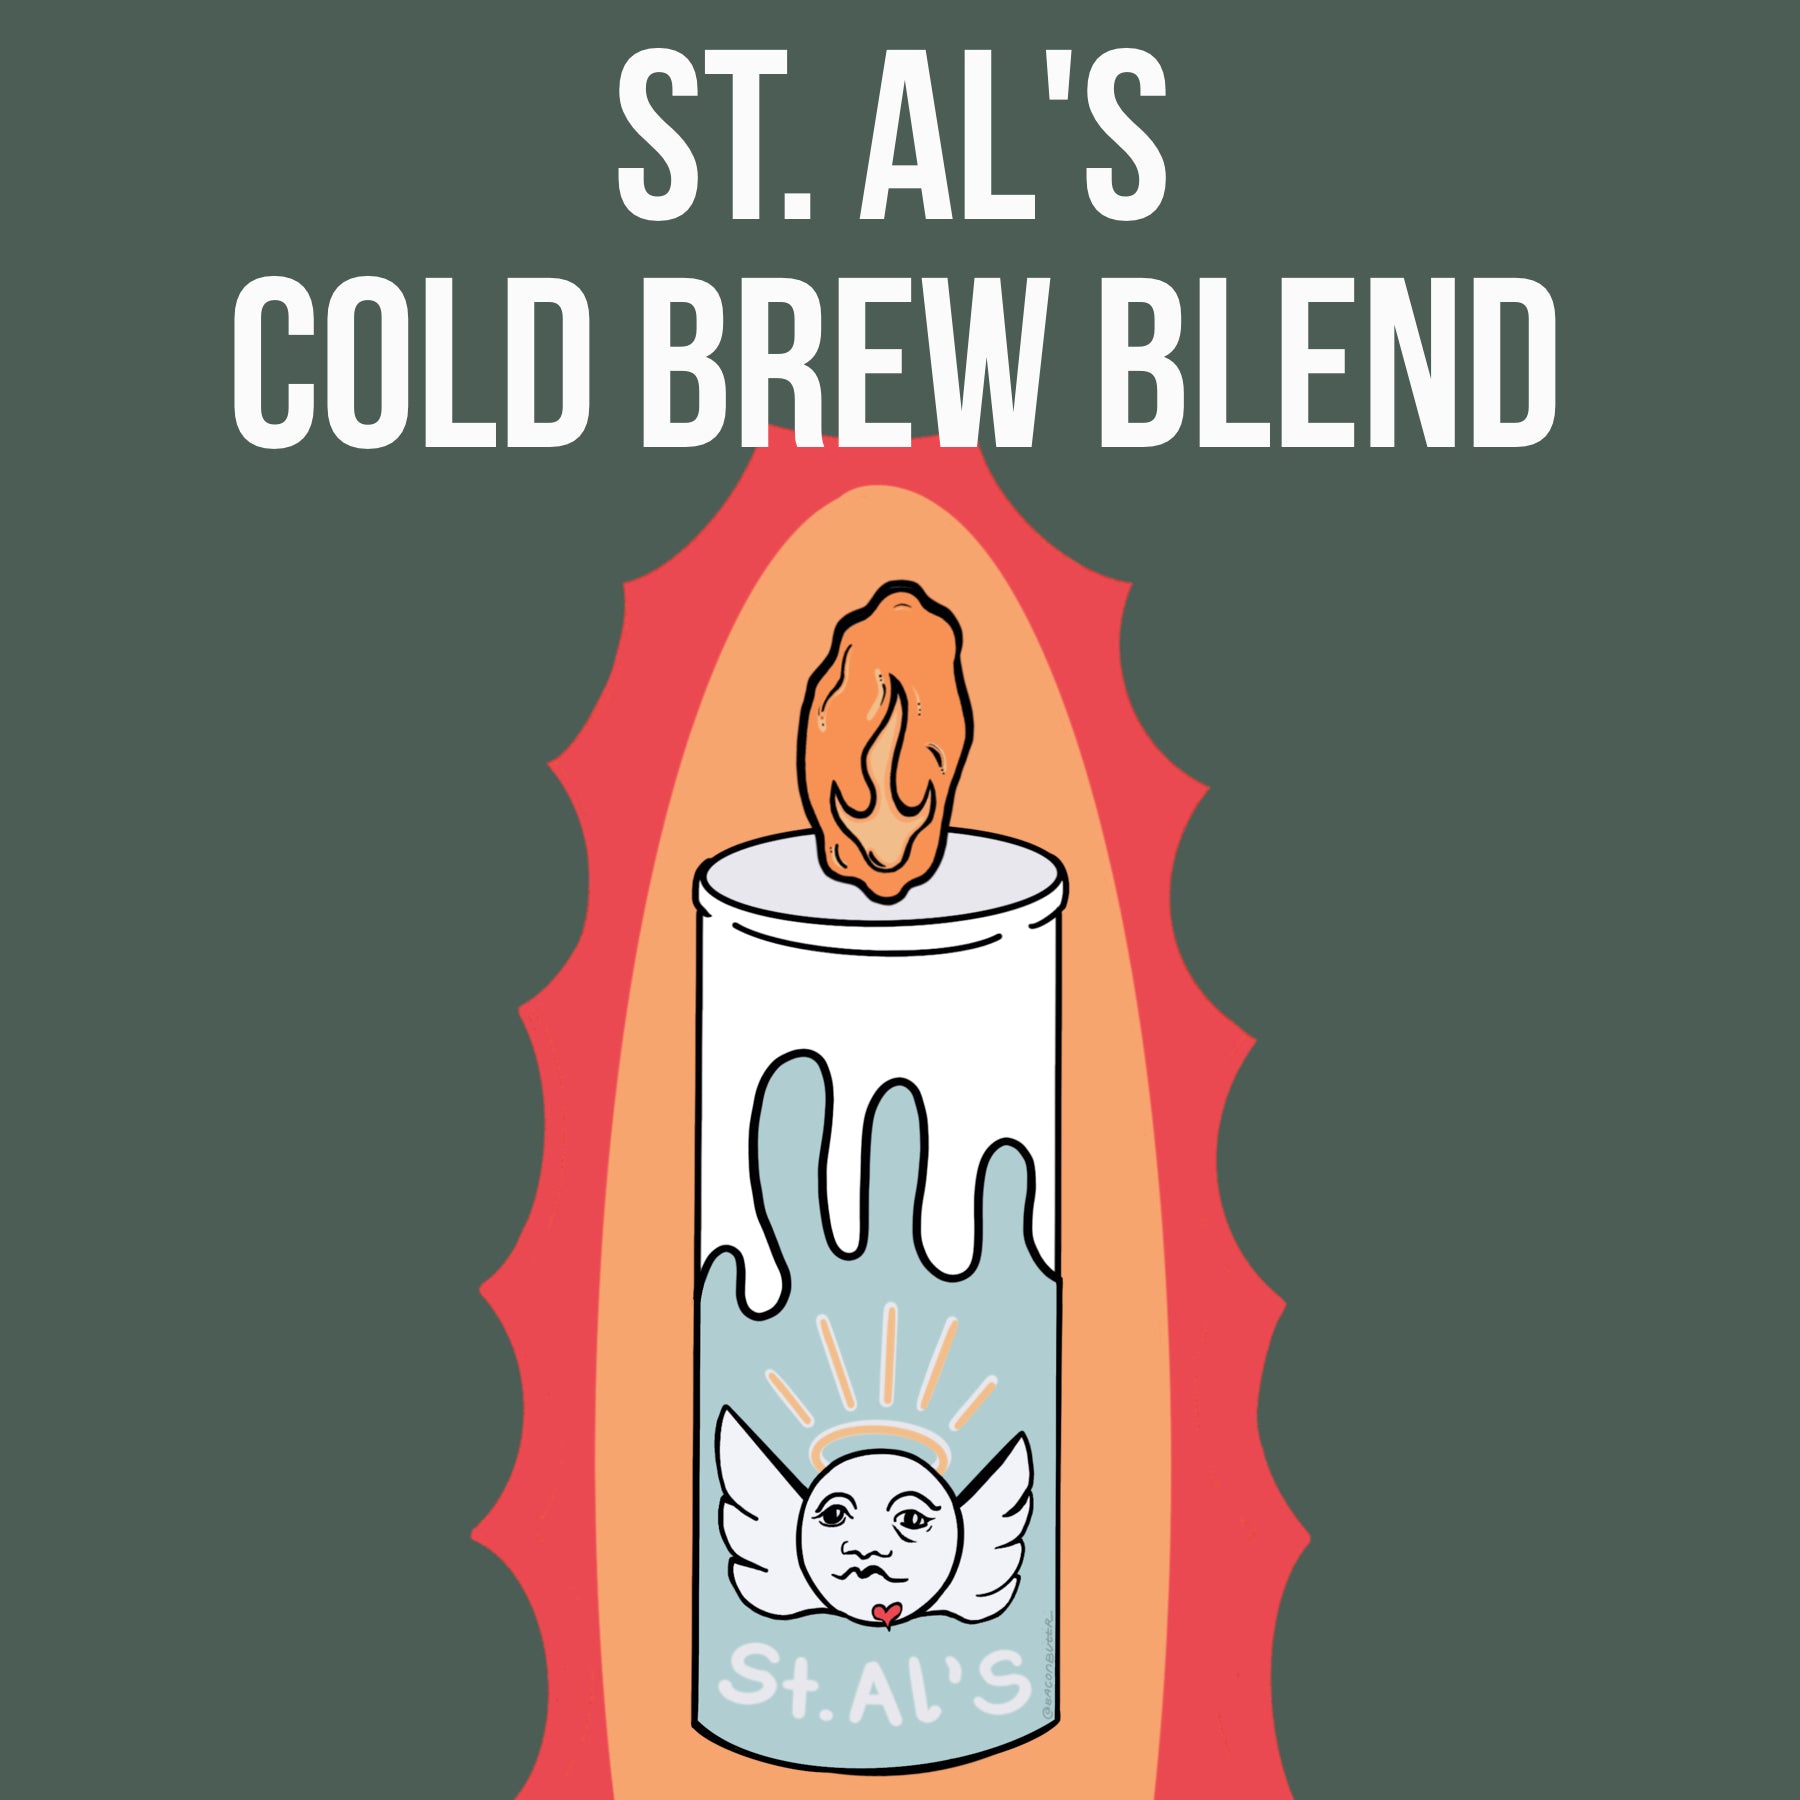 St. Al's Cold Brew Blend